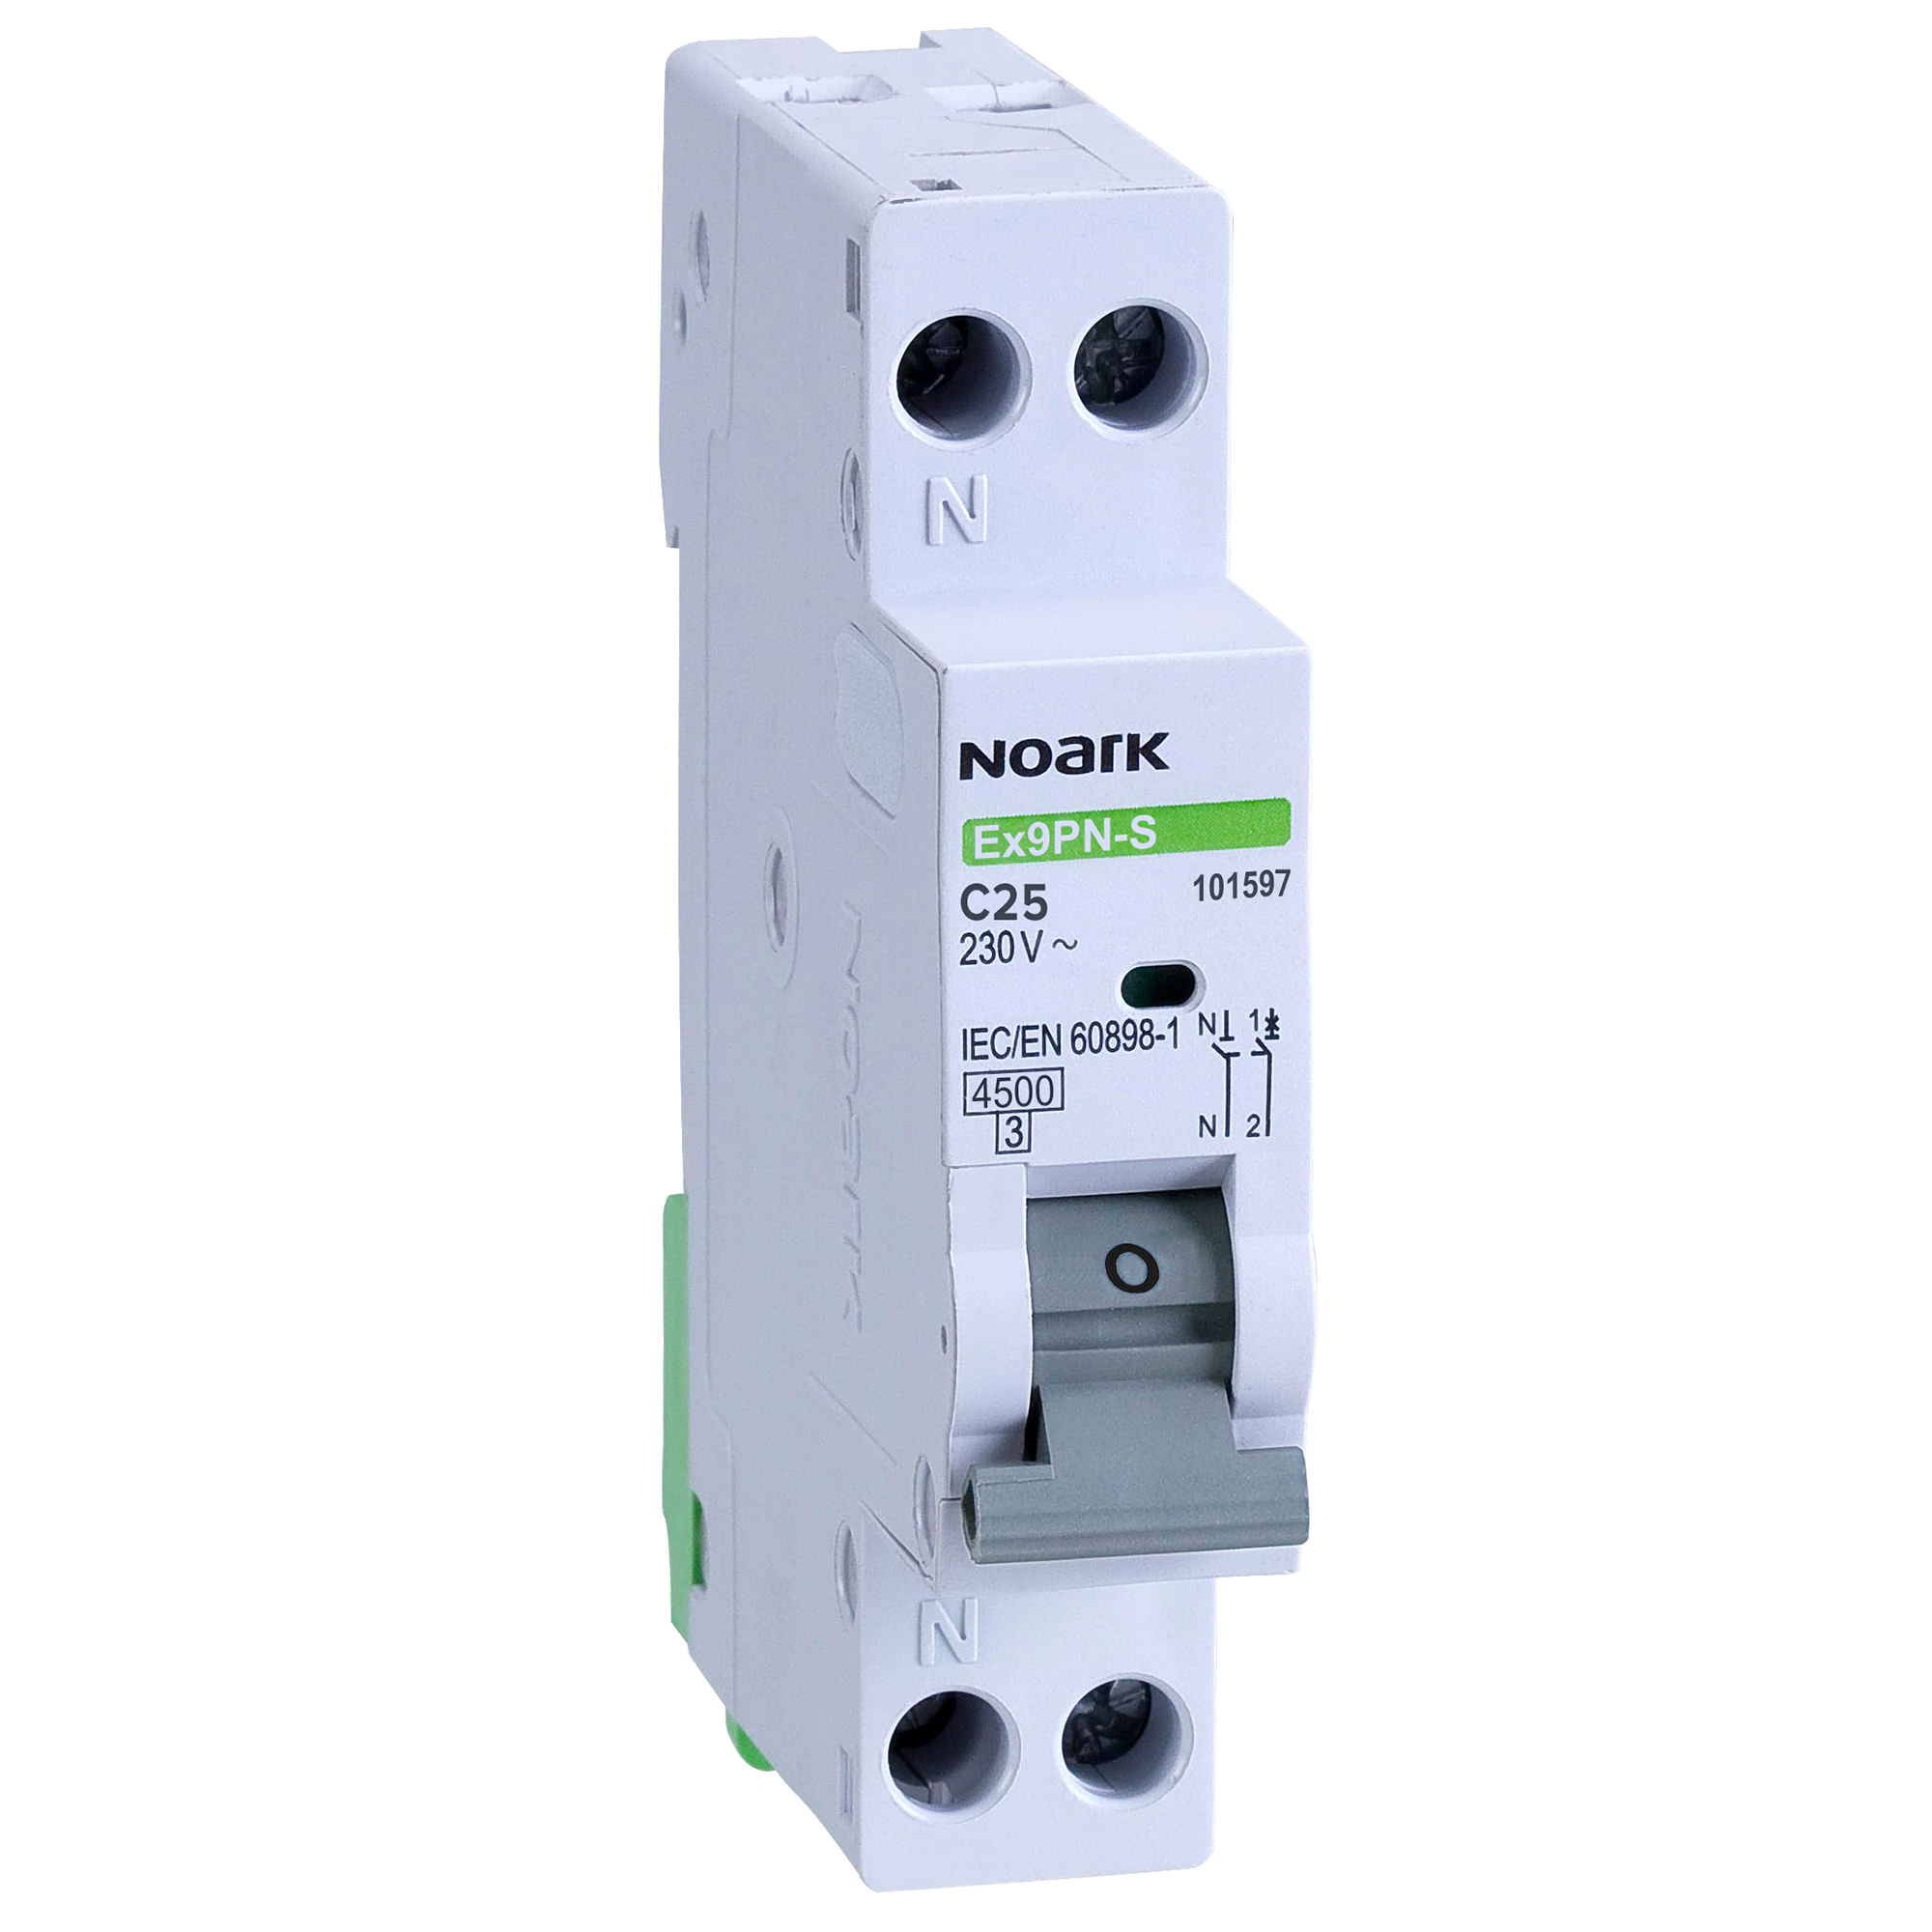 Intrerupator automat monofazat, siguranta curent alternativ, 1P+N, 25A, Noark, Ex9PN-S